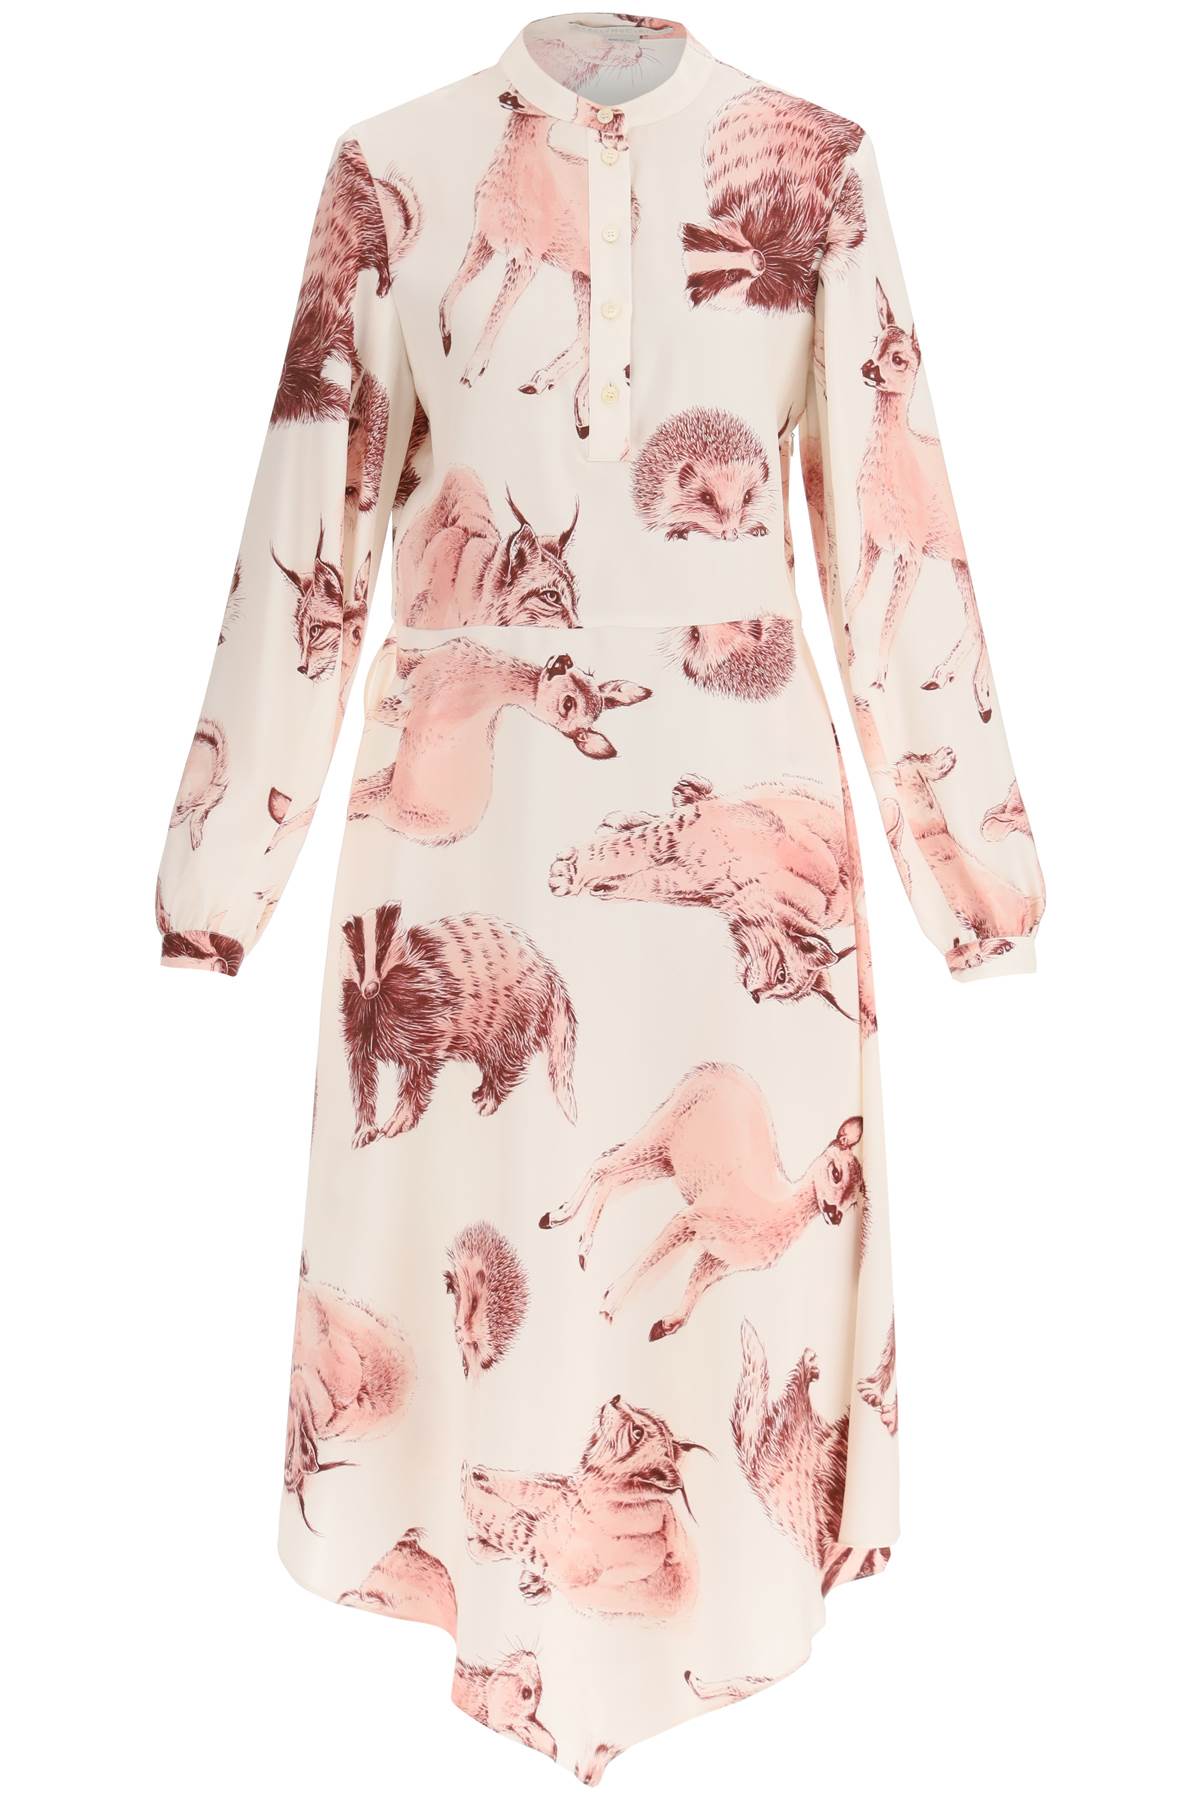 Stella mccartney fauna rewild print shirt dress-0